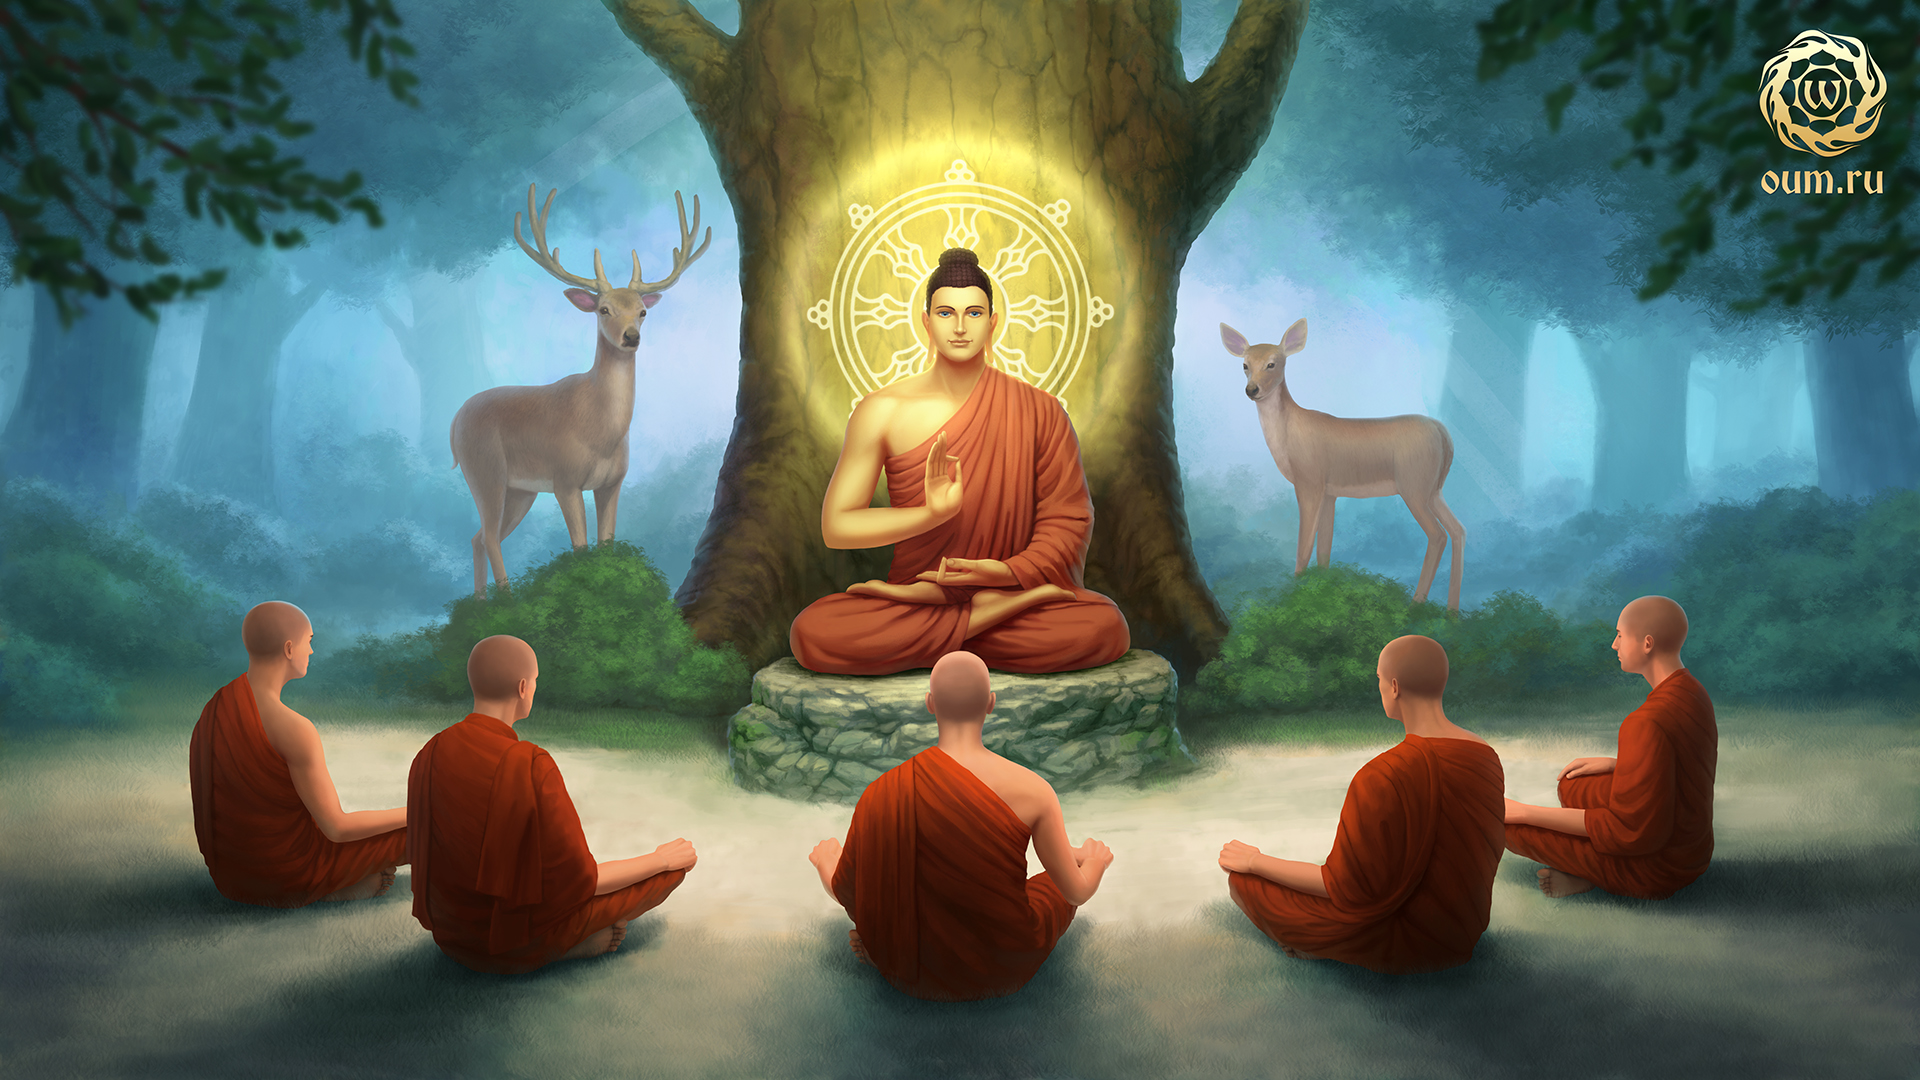 Проповедь будды. Сиддхартха Гаутама Будда. Будда Сиддхартха Гаутама Шакьямуни. Будда Гаутама Бодхисаттва. Бодхисаттва Будда Шакьямуни Гаутама.